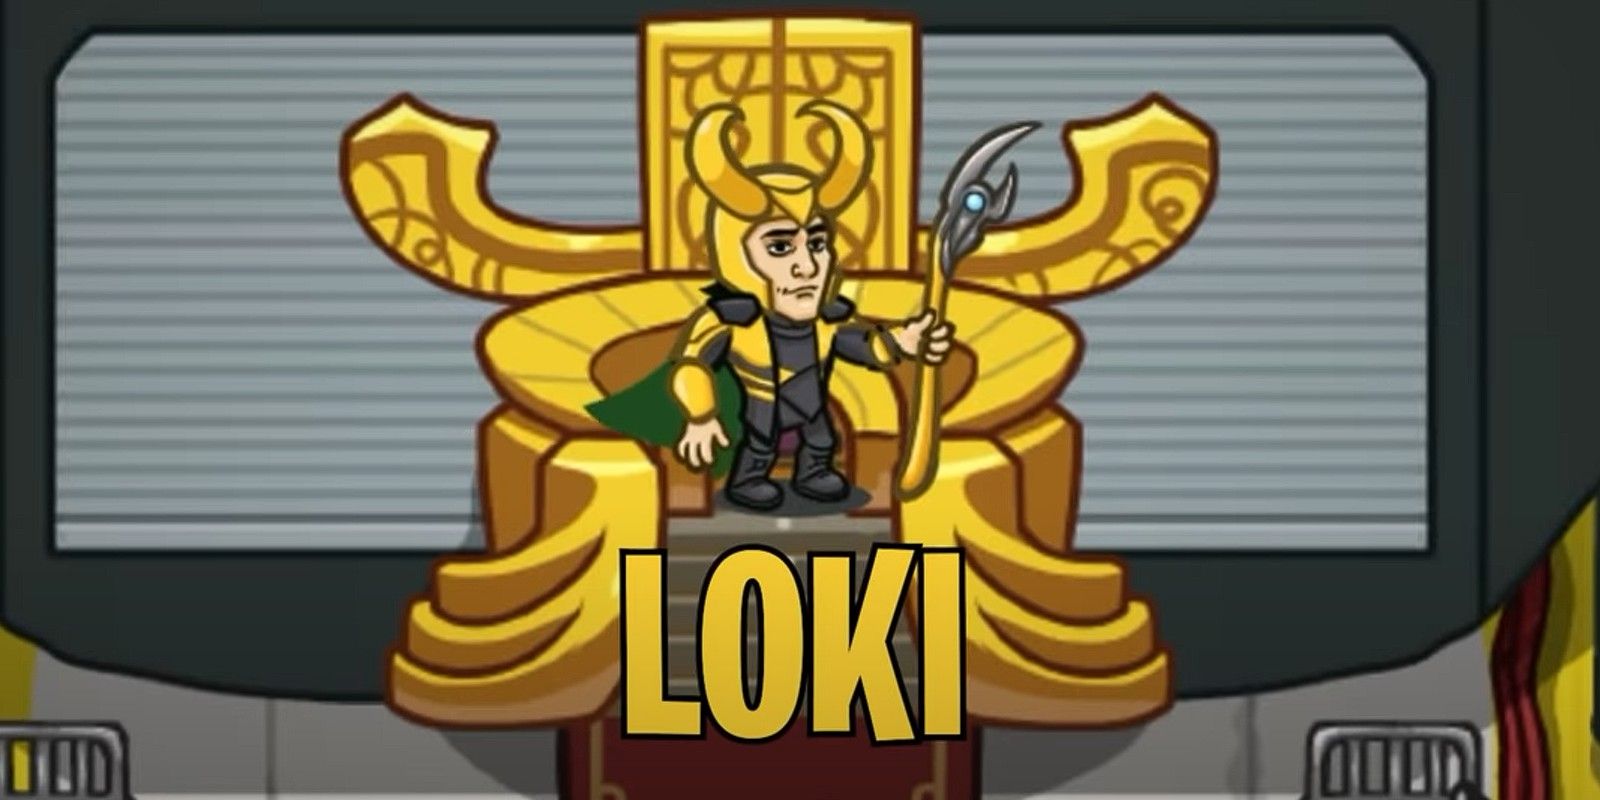 Loki Impostor Role Mod in Among Us